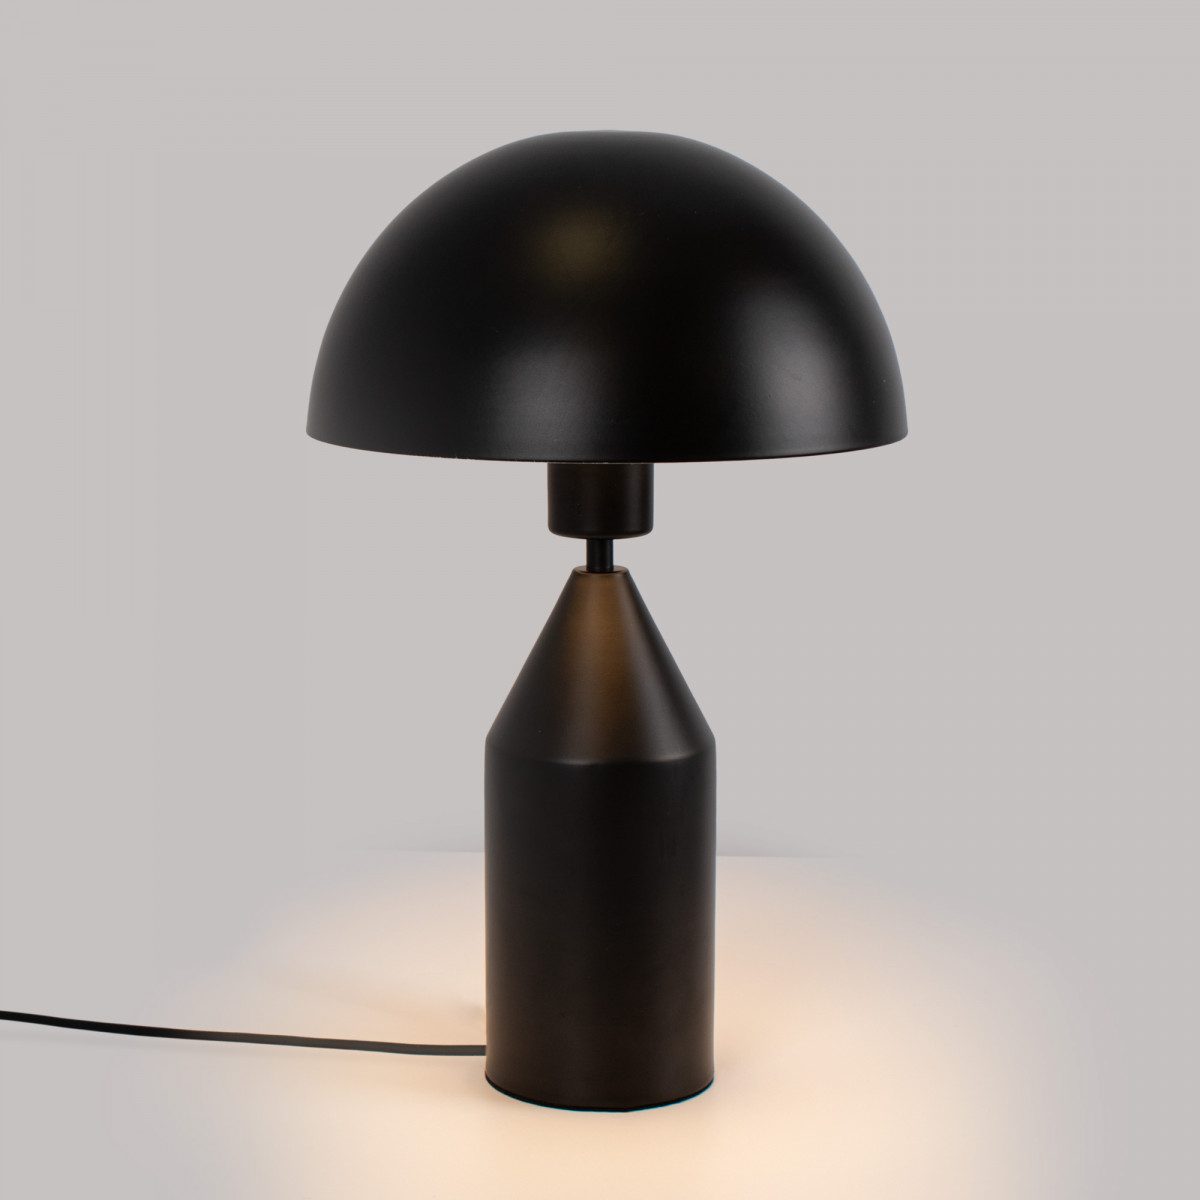 Metal table lamp "Cutt" - E27